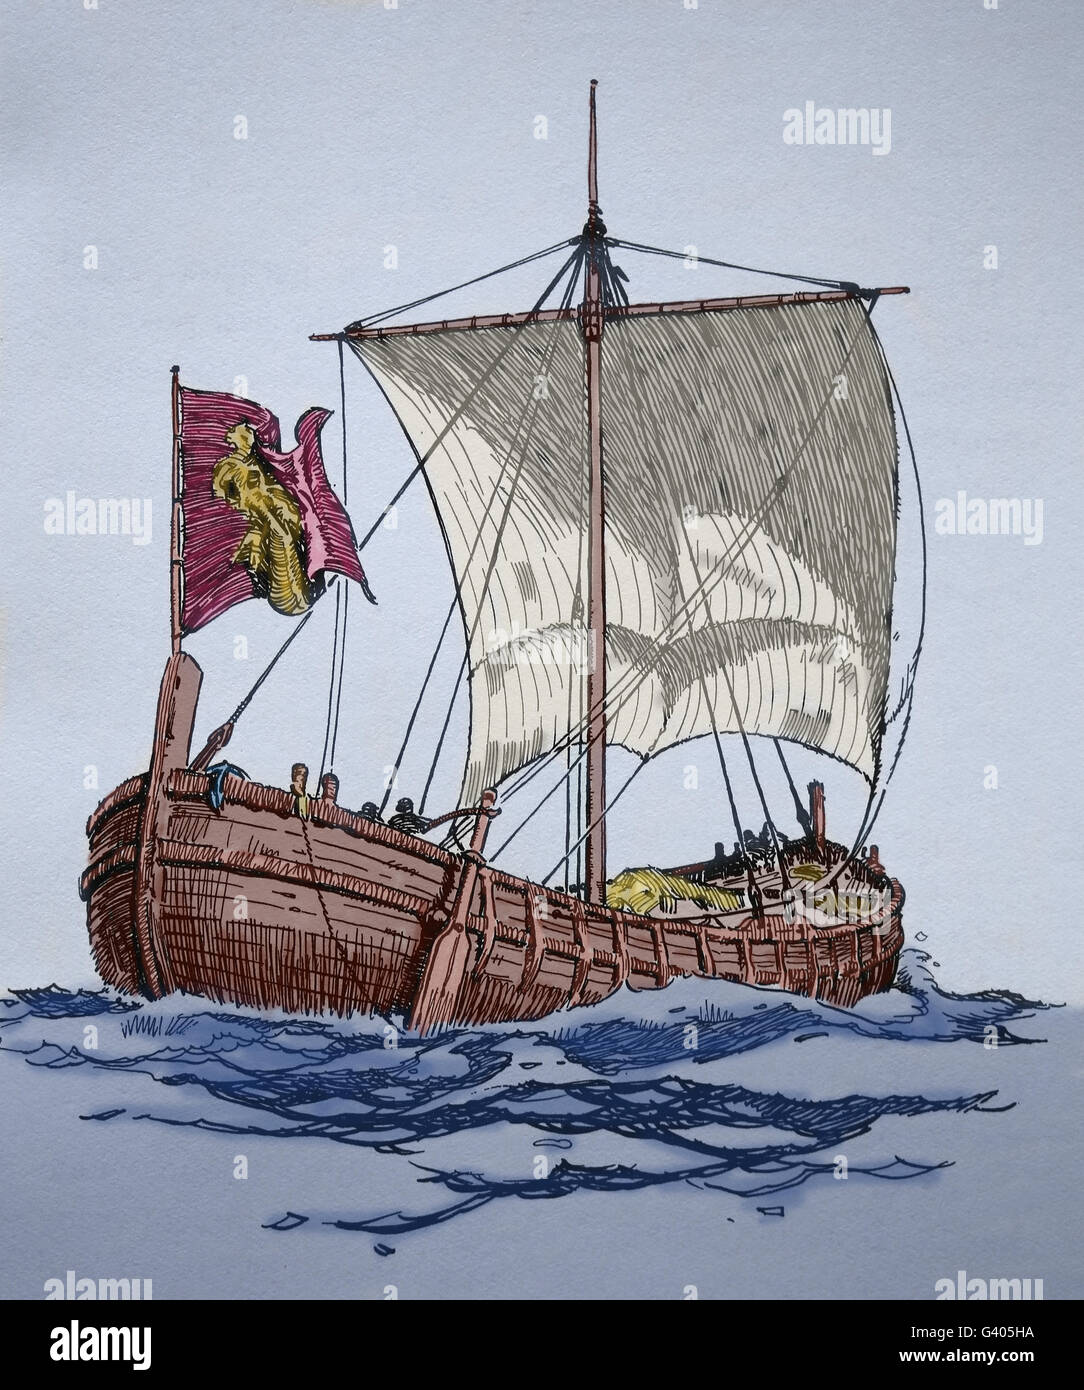 A medieval ship. Engraving, 19th century. Color. Stock Photo